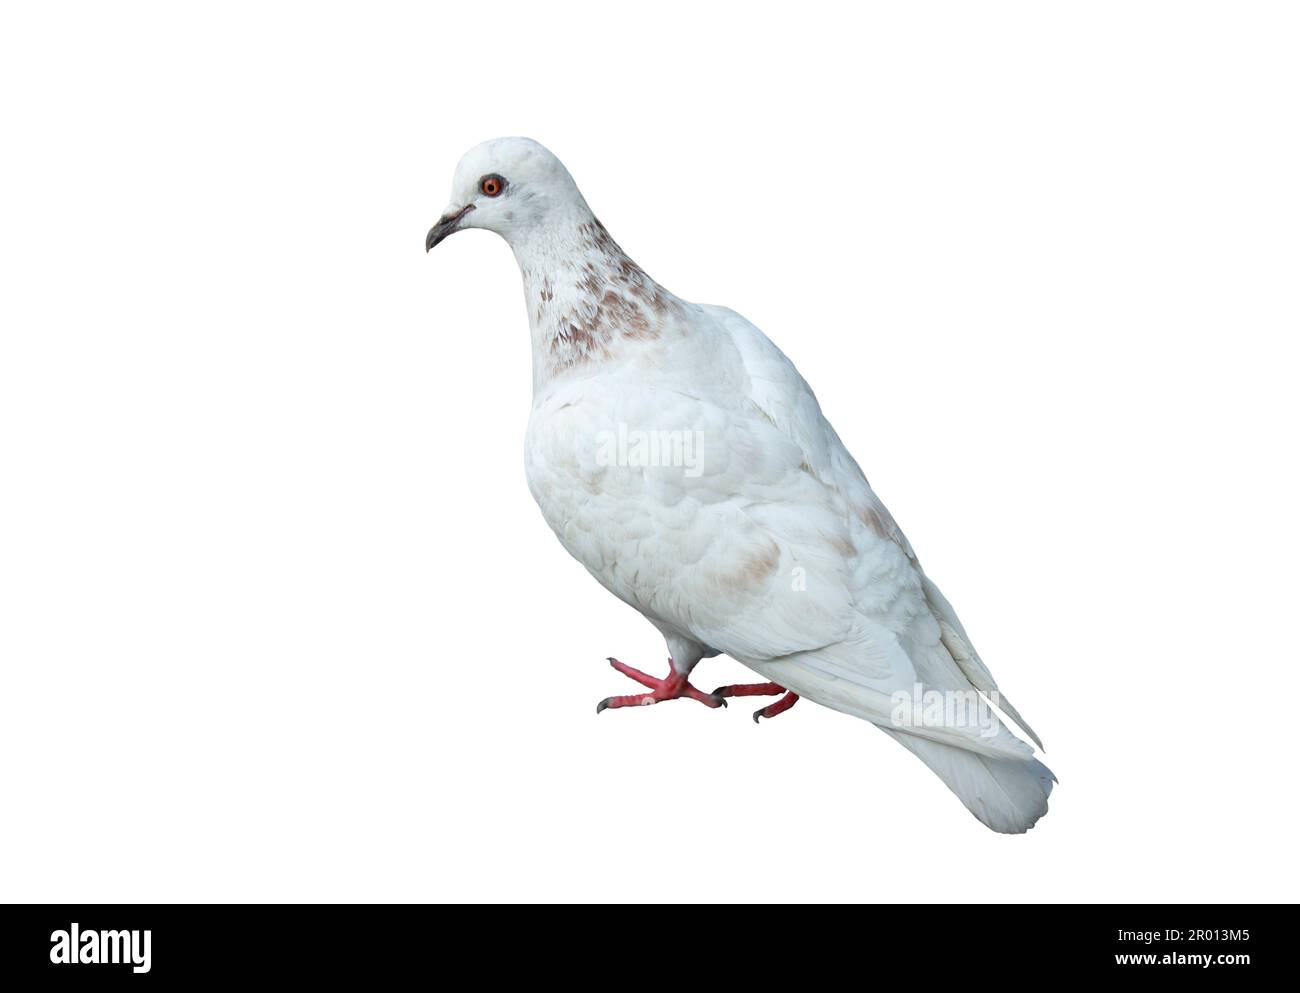 White pigeon isolated on white background Stock Photo